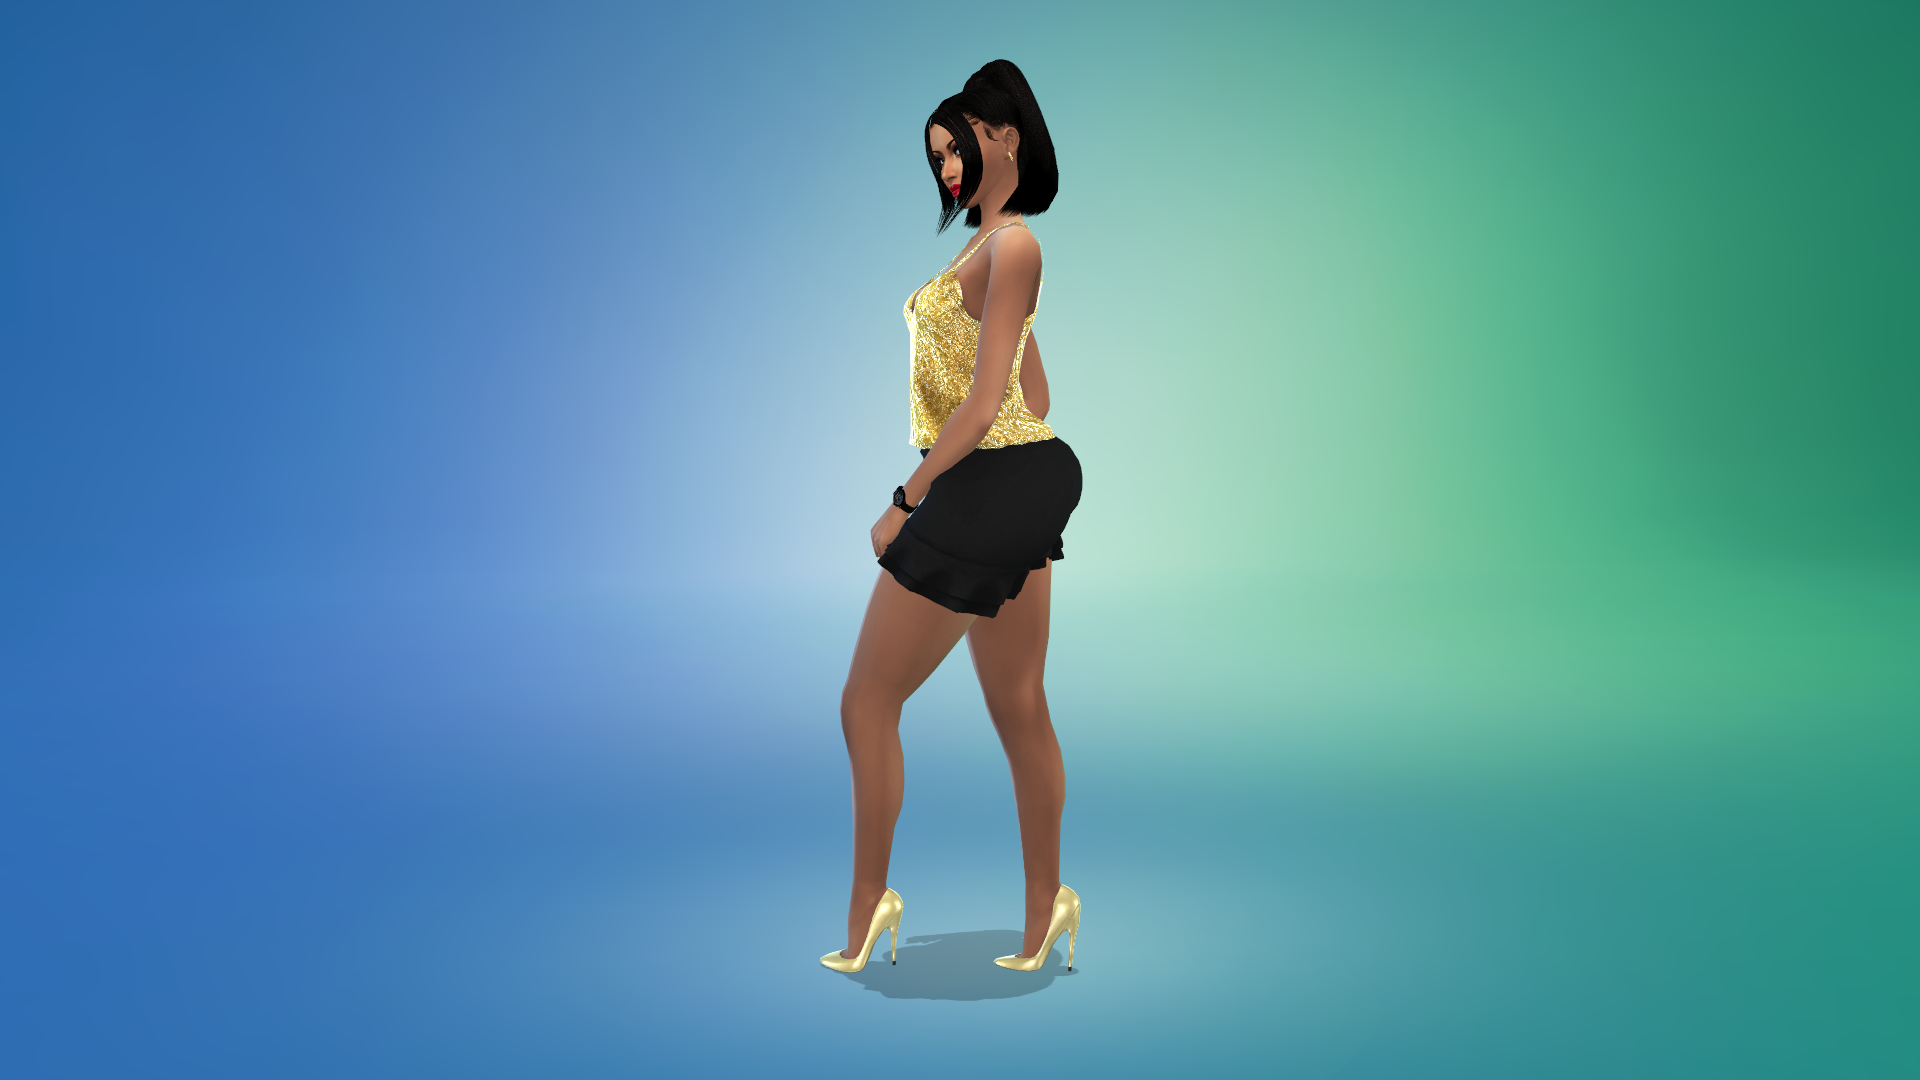 Sharon Porter & The AUDITION V2 Body Preset - The Sims 4 Catalog